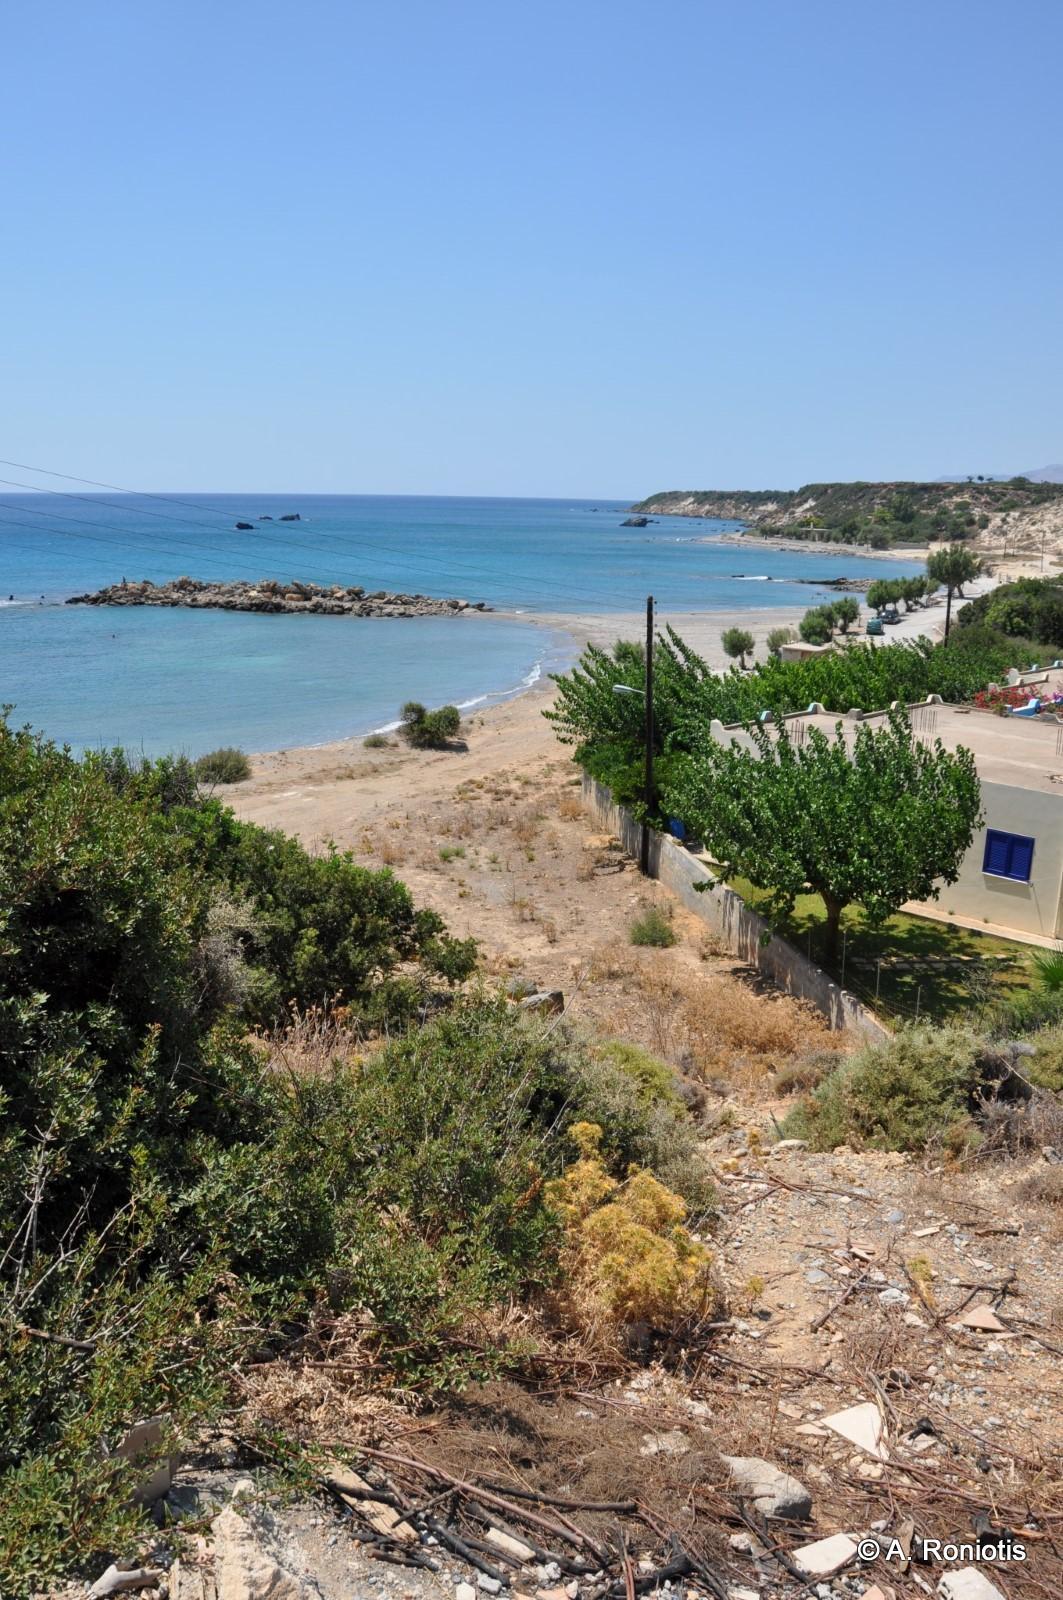 Lakki beach - Travel Guide for Island Crete, Greece